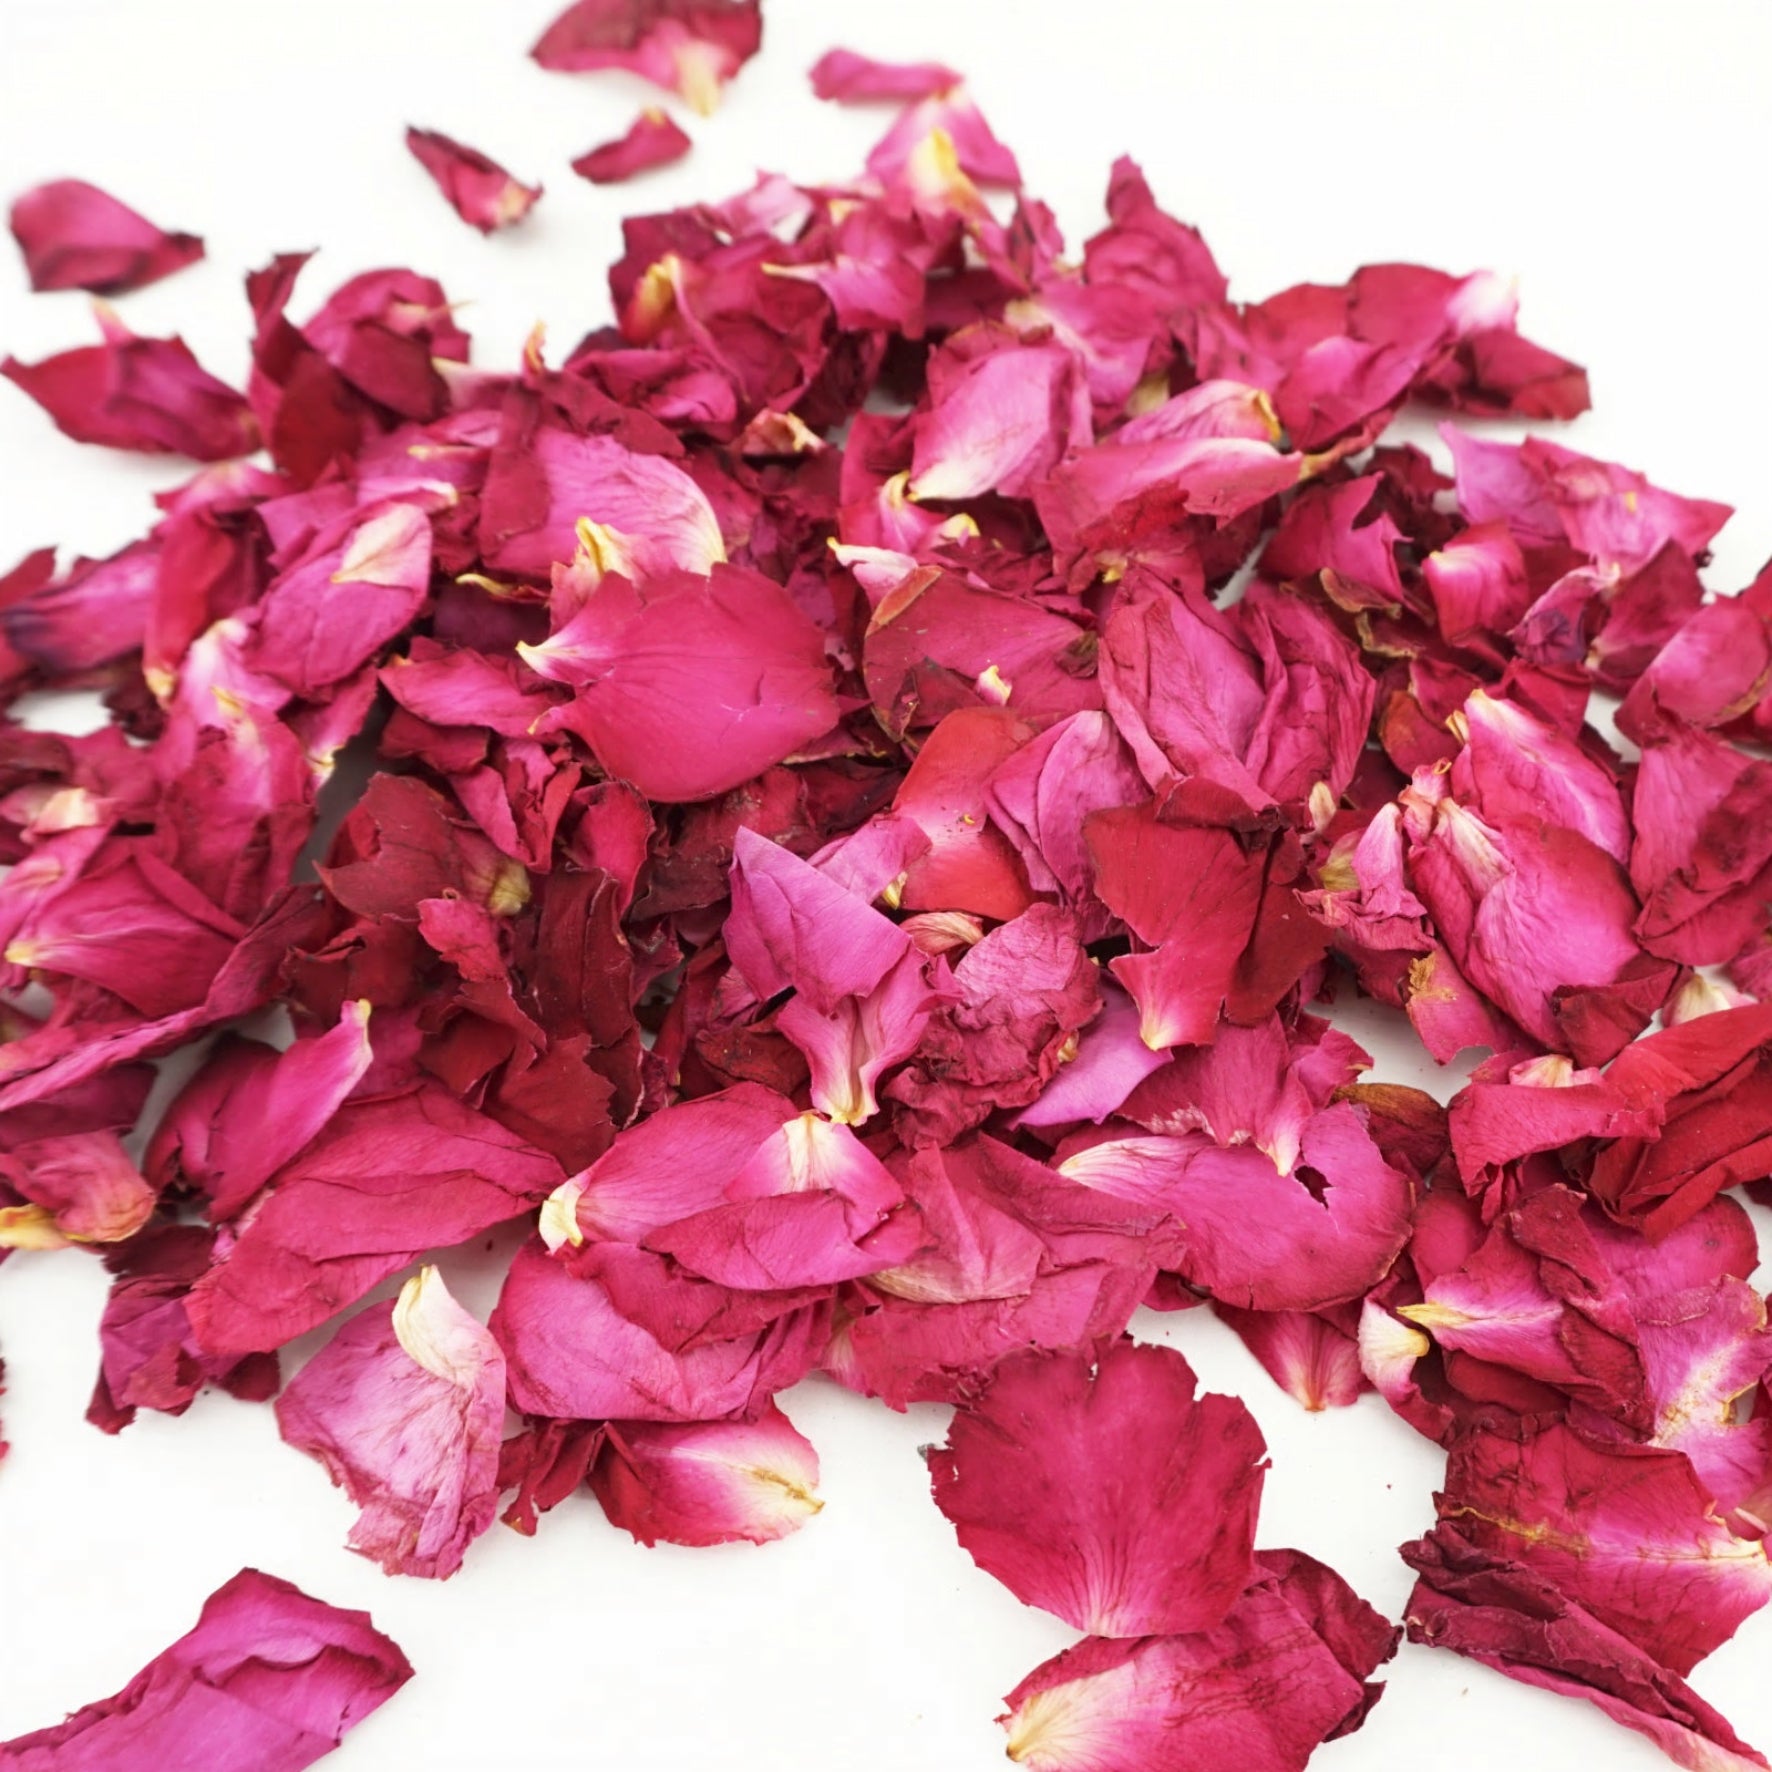 Dry rose petals